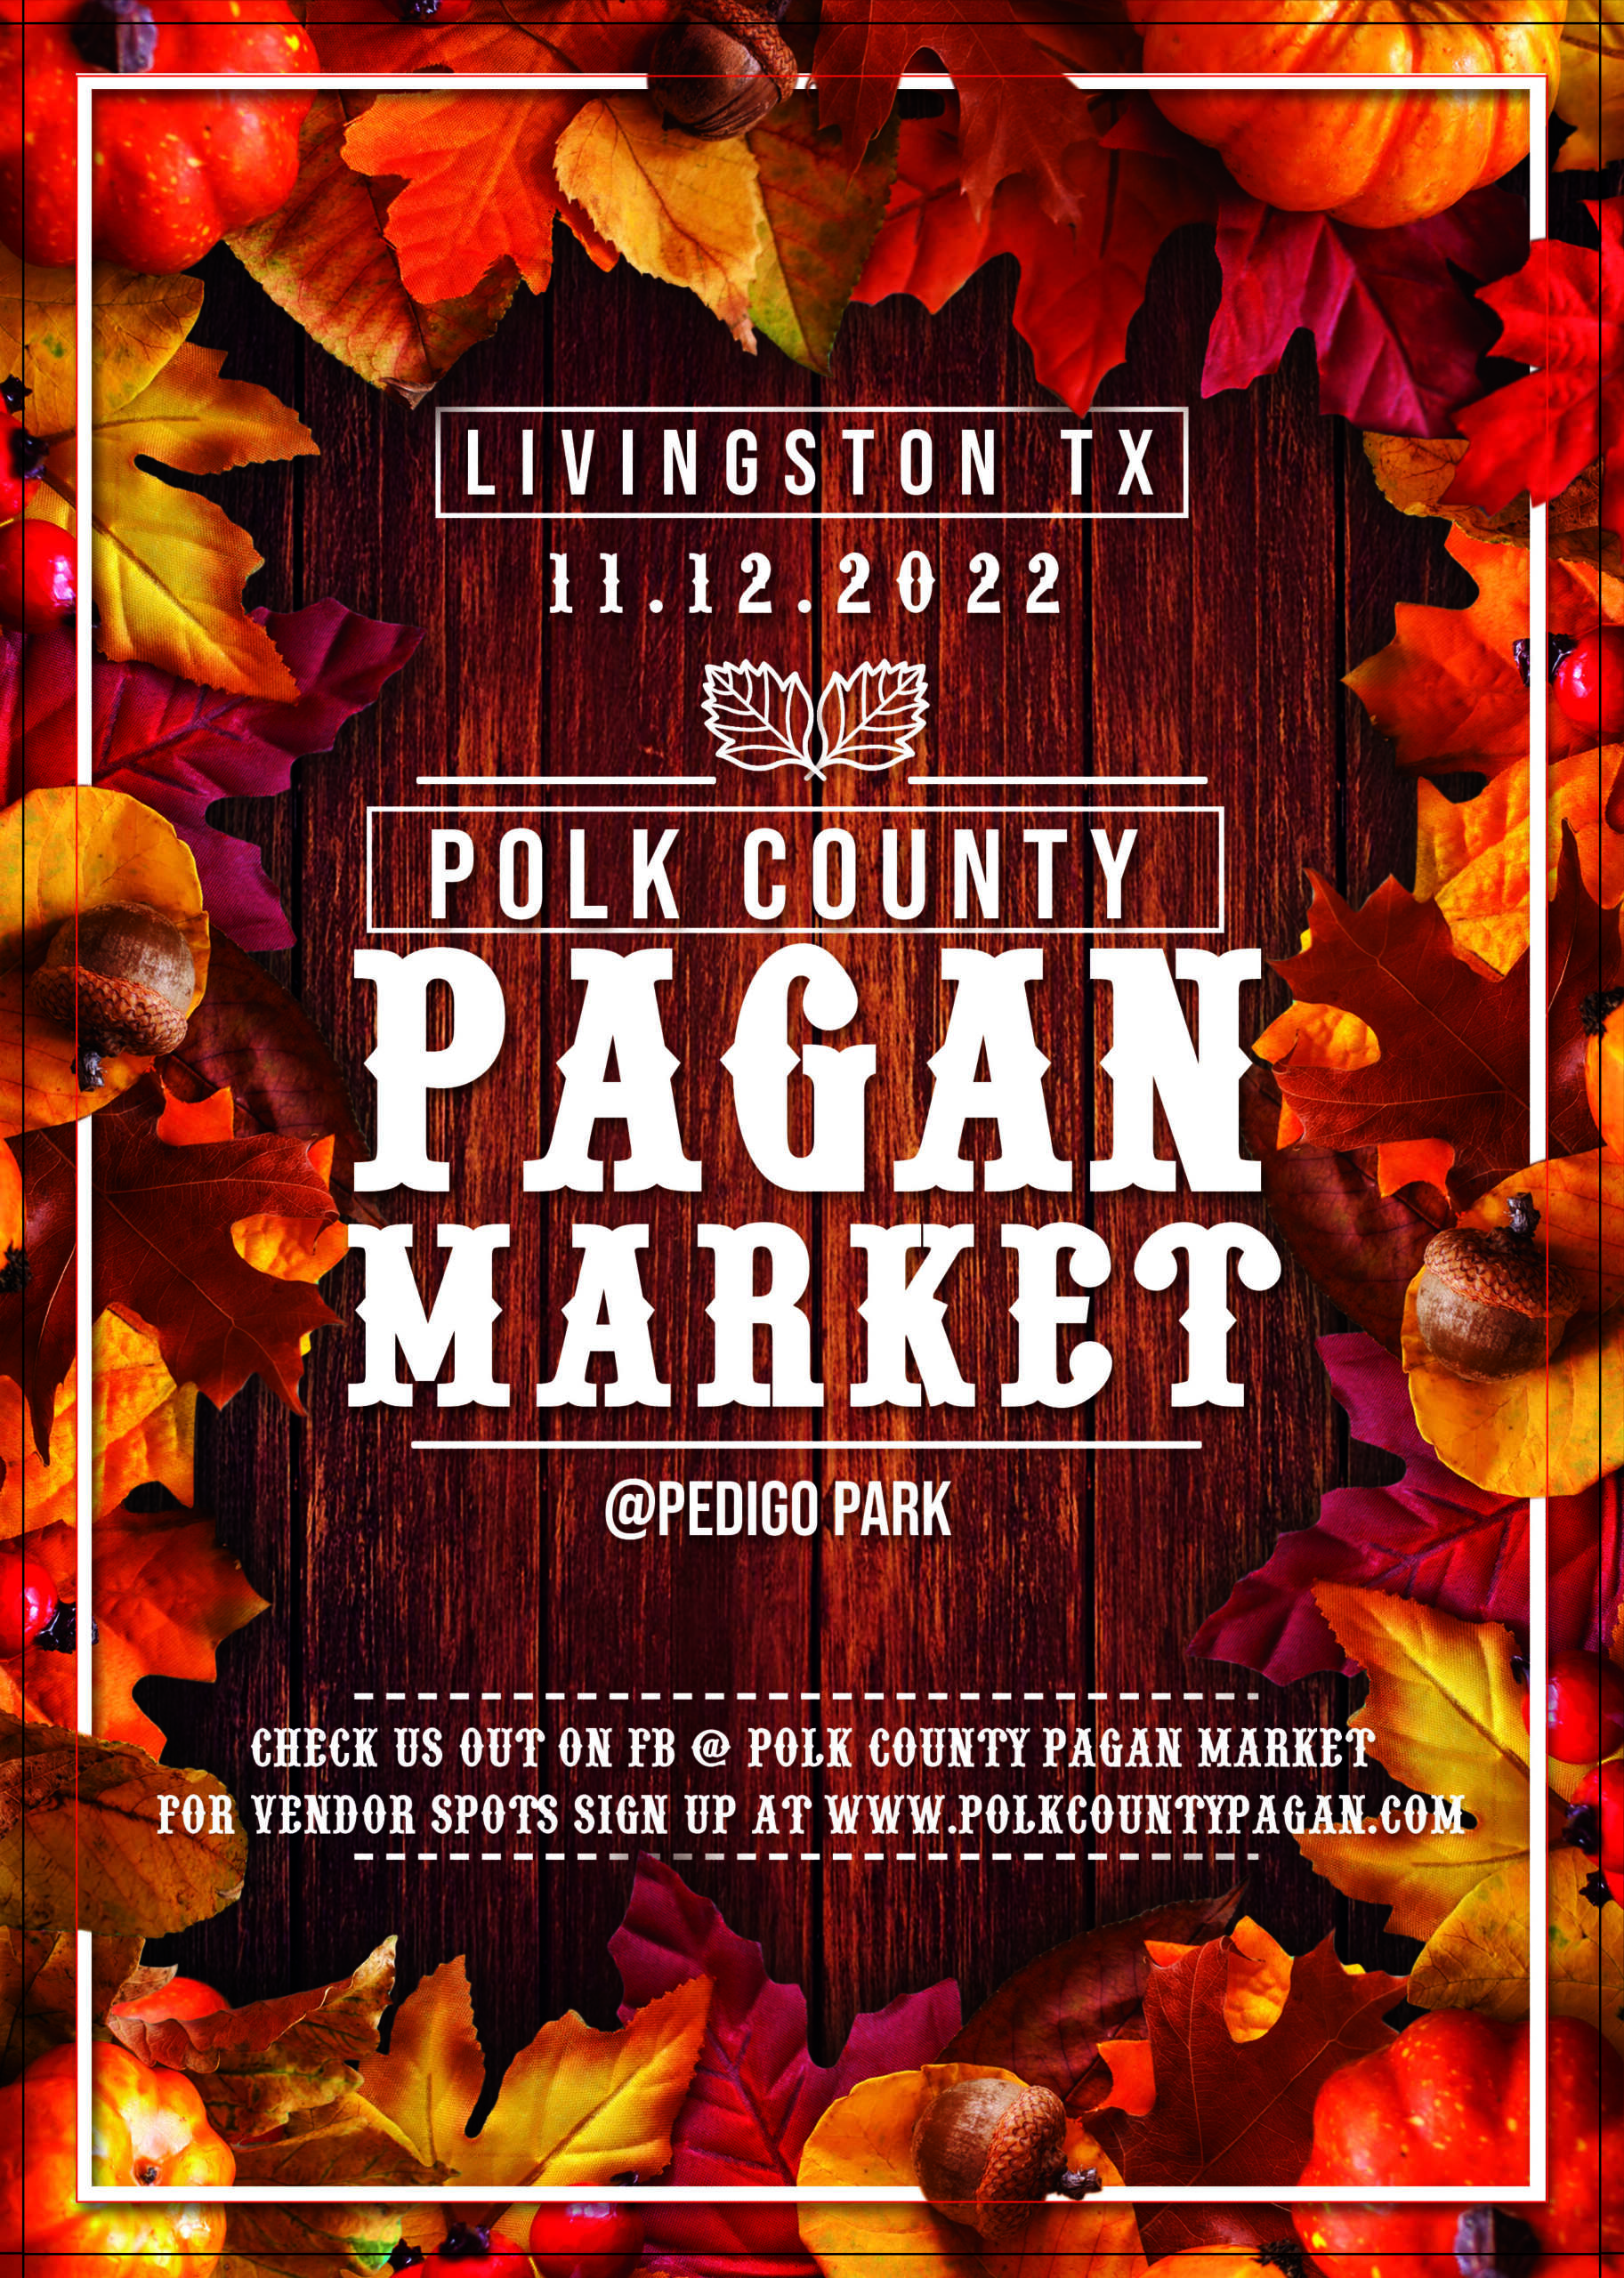 pagan market livingston texas